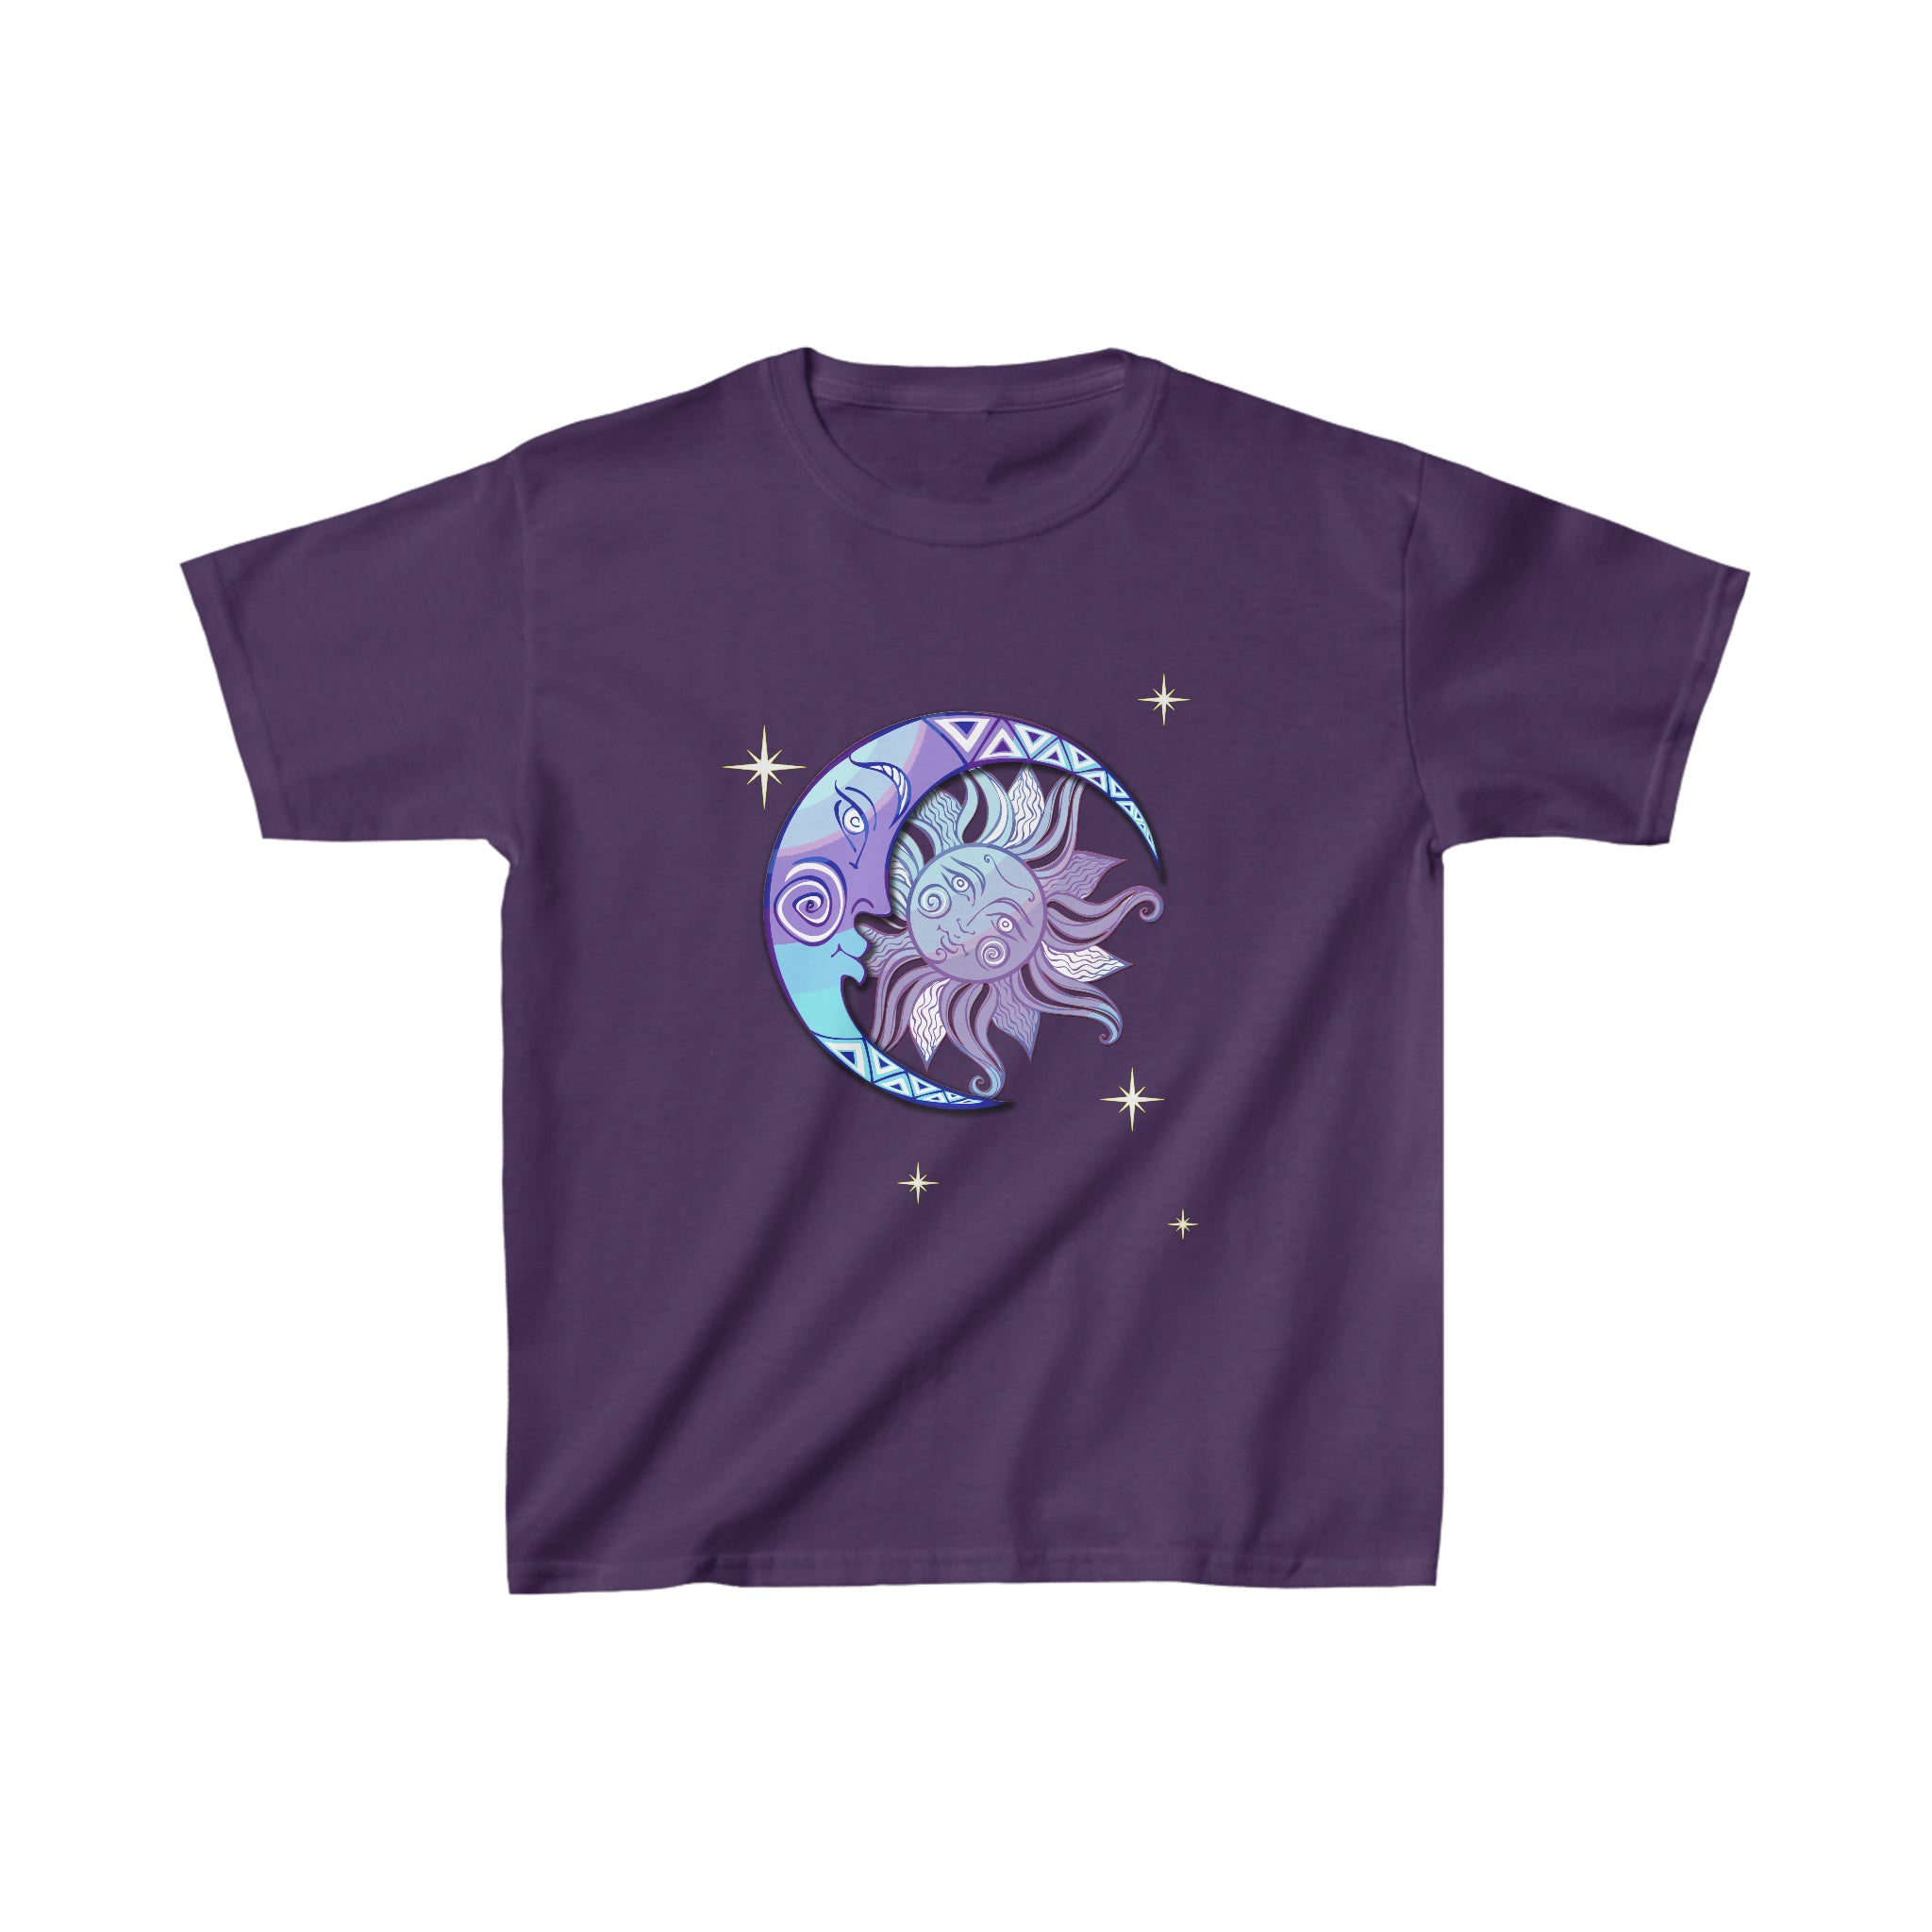 Moon and Sun (kids) T-Shirt